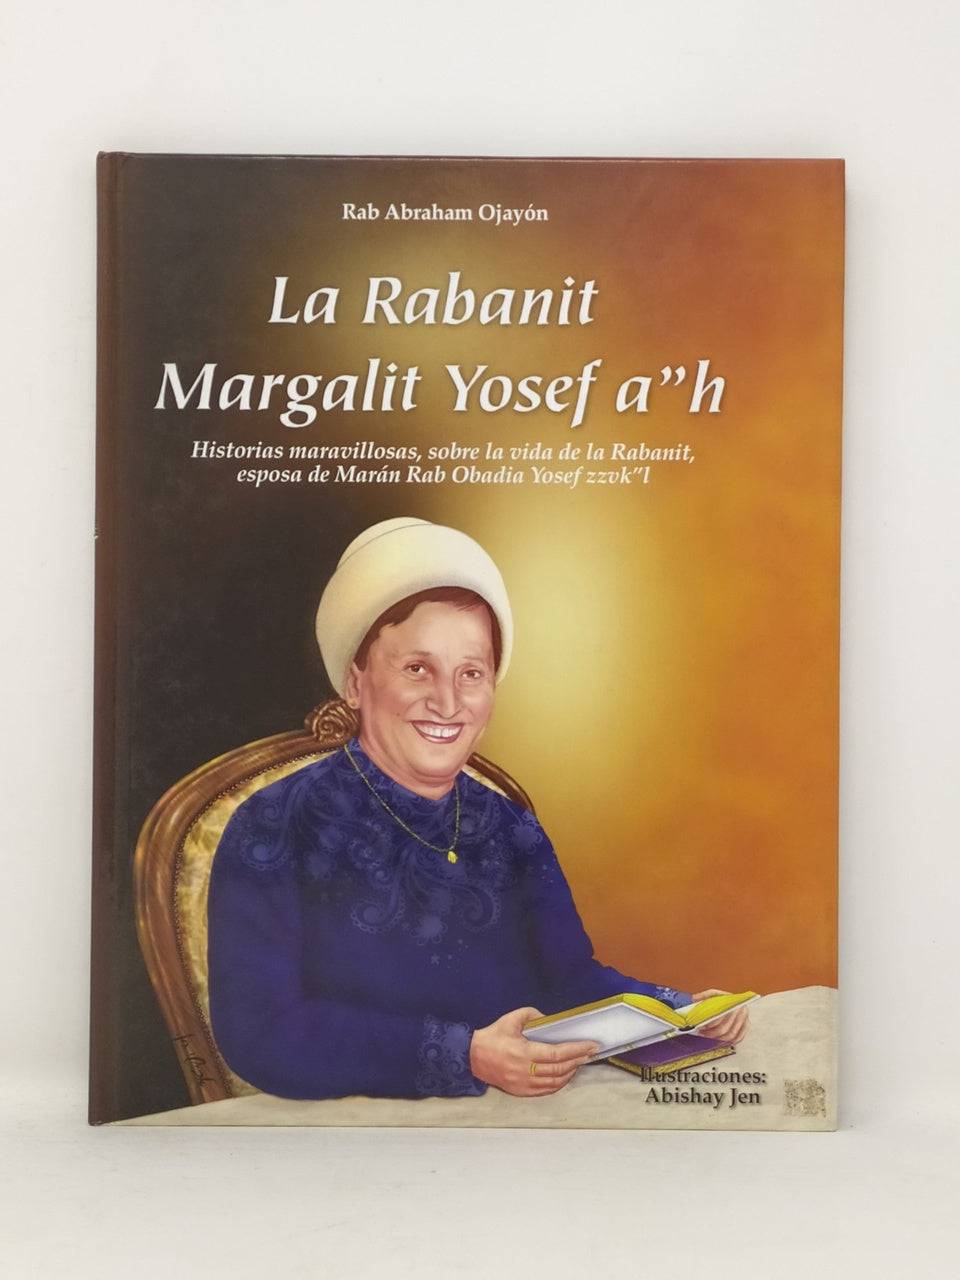 La Rabanit Margalit Yosef Ah - Libreria Jerusalem Centro